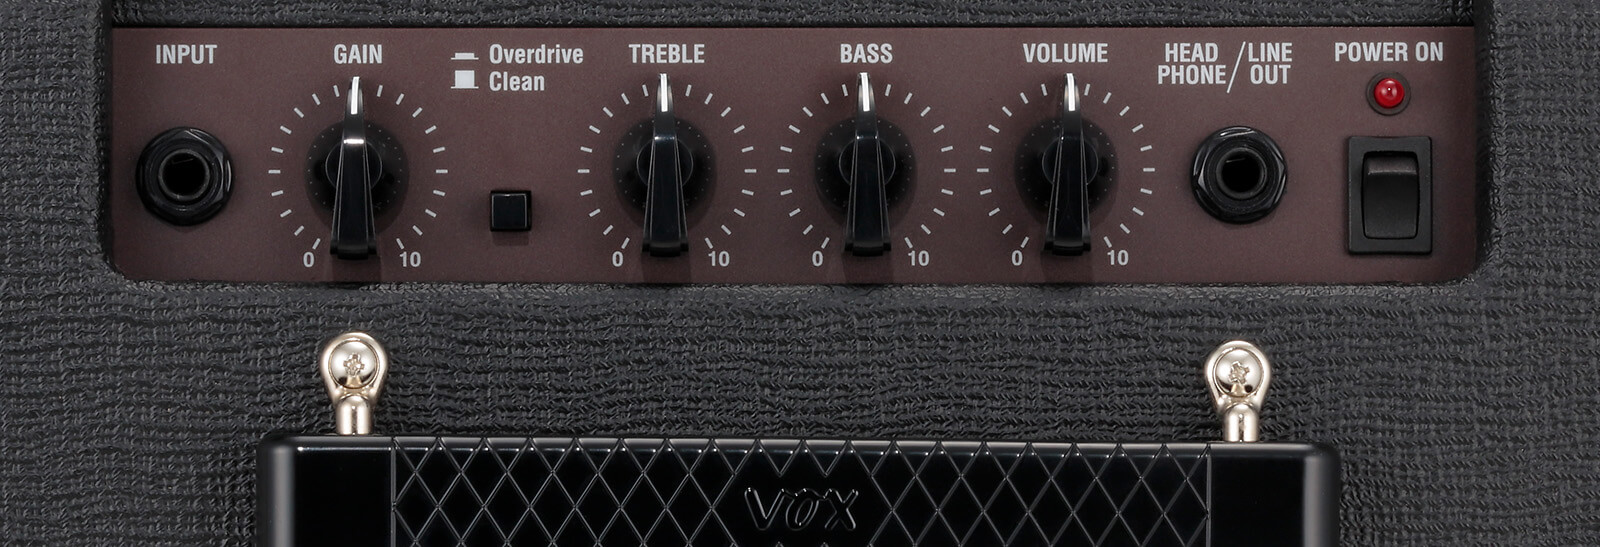 Pathfinder 10 - Vox Amps